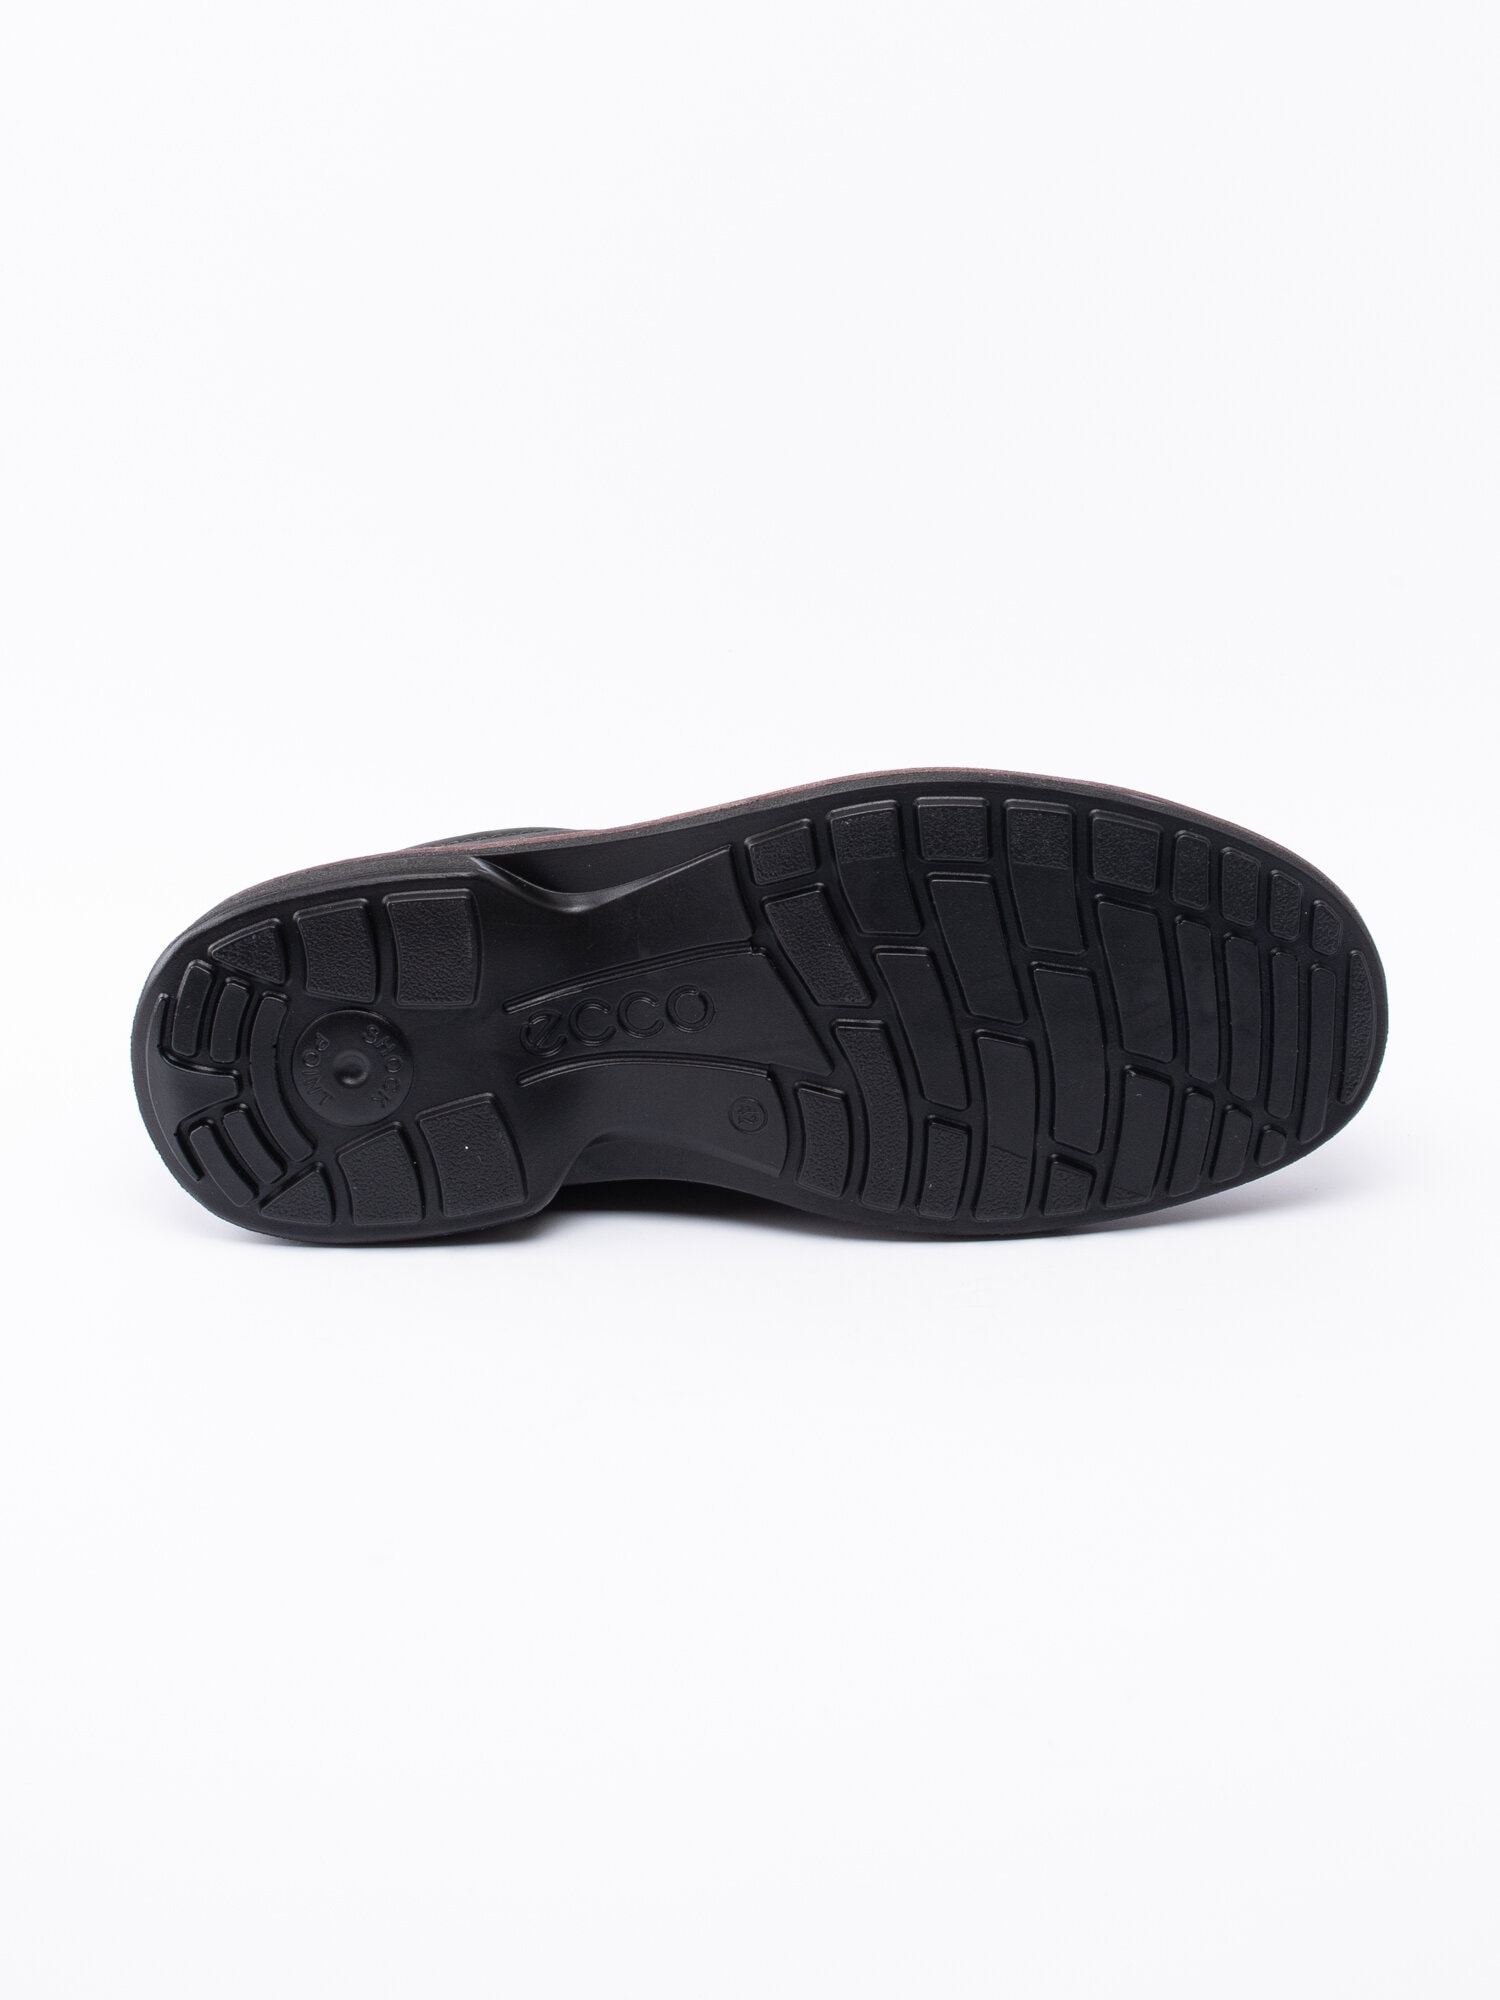 Ecco - Turn GTX - Svarta slip on loafers